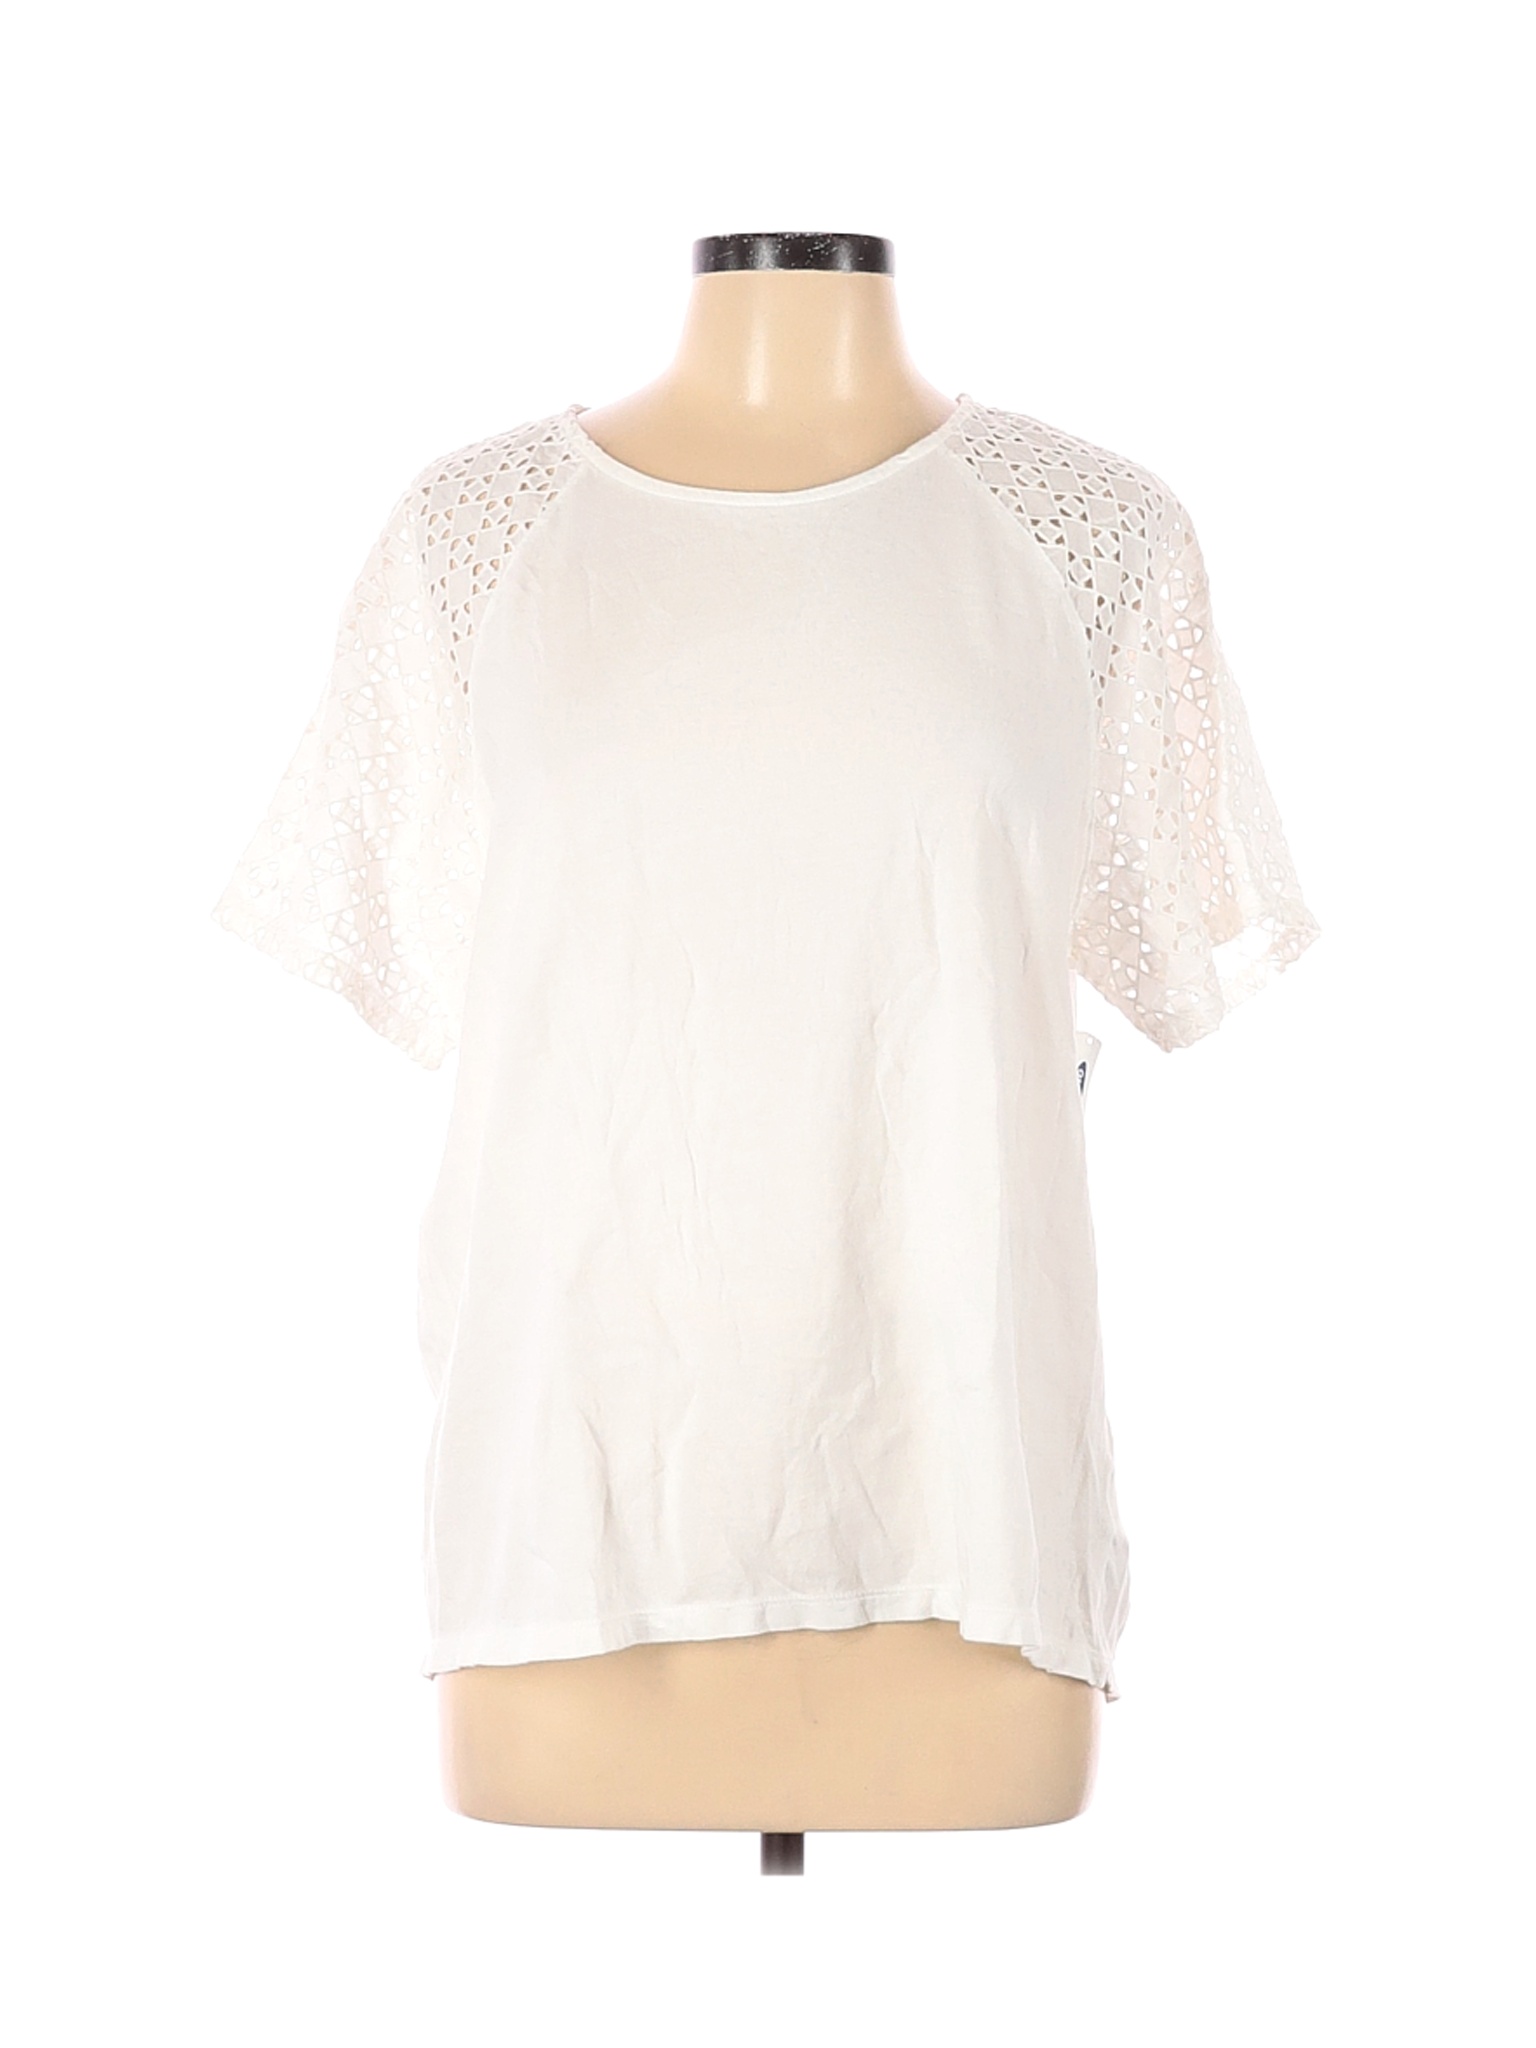 NWT Old Navy Women White Short Sleeve Blouse L | eBay